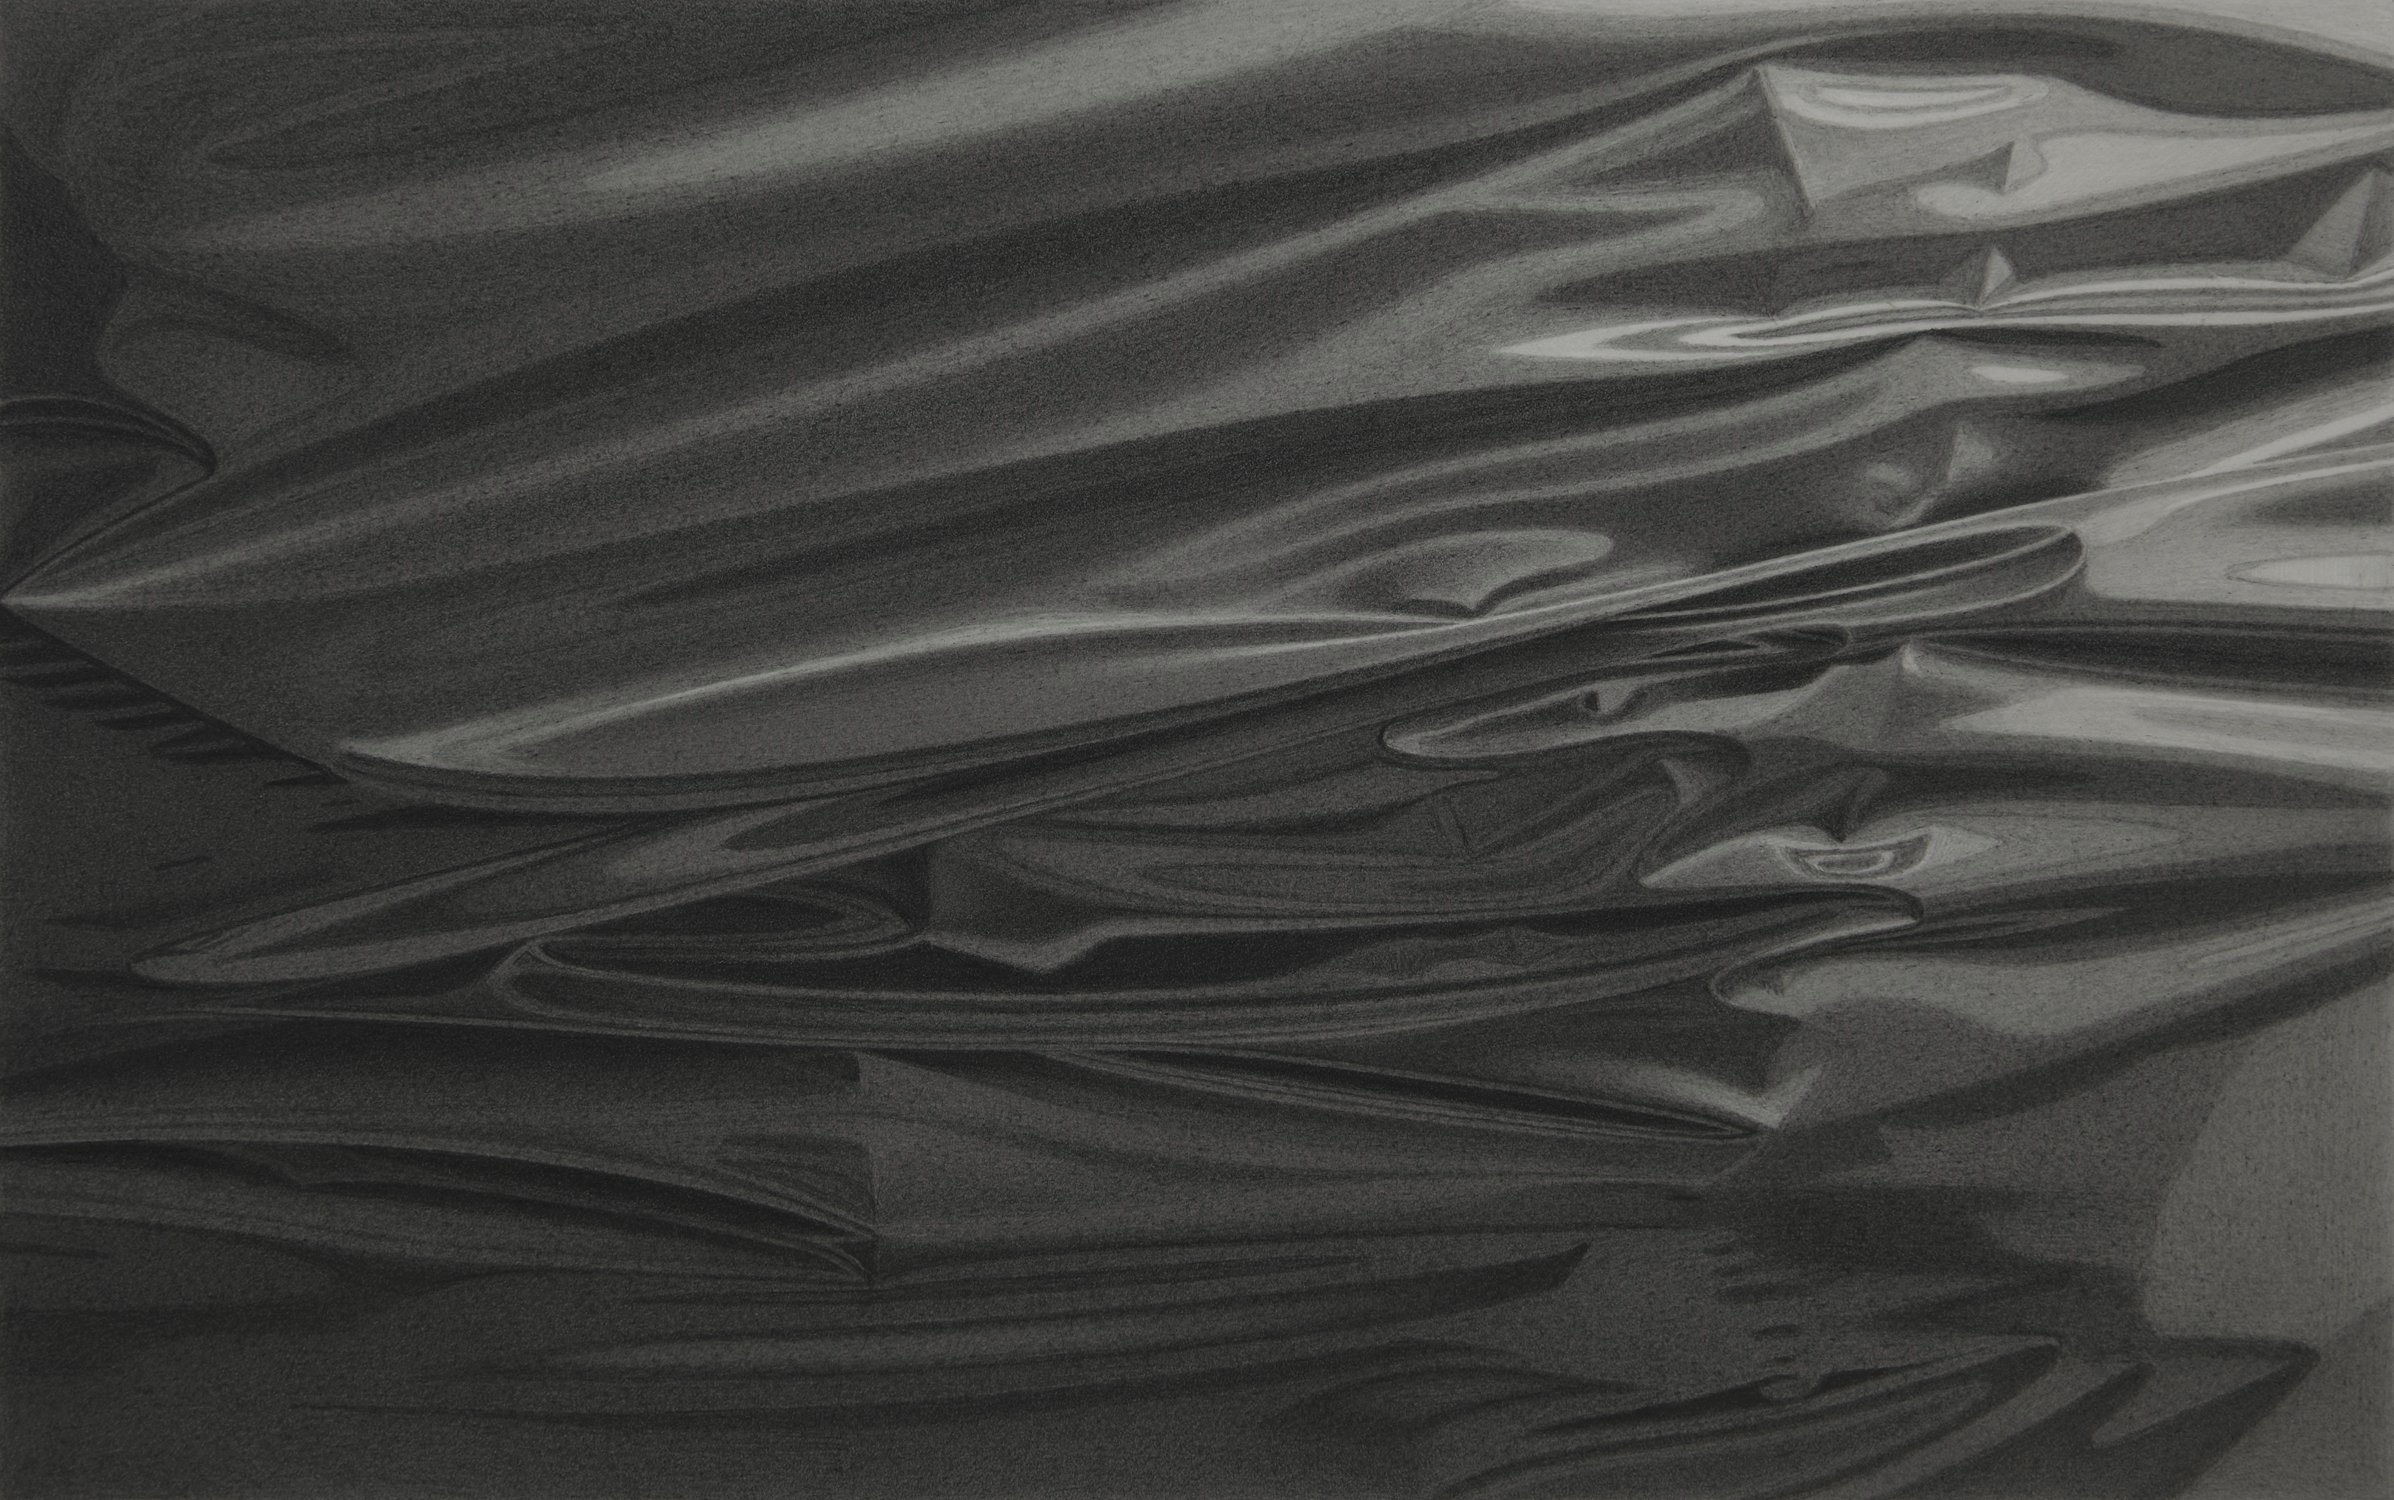  Plastic  7.5x12”, graphite on paper, 2012   